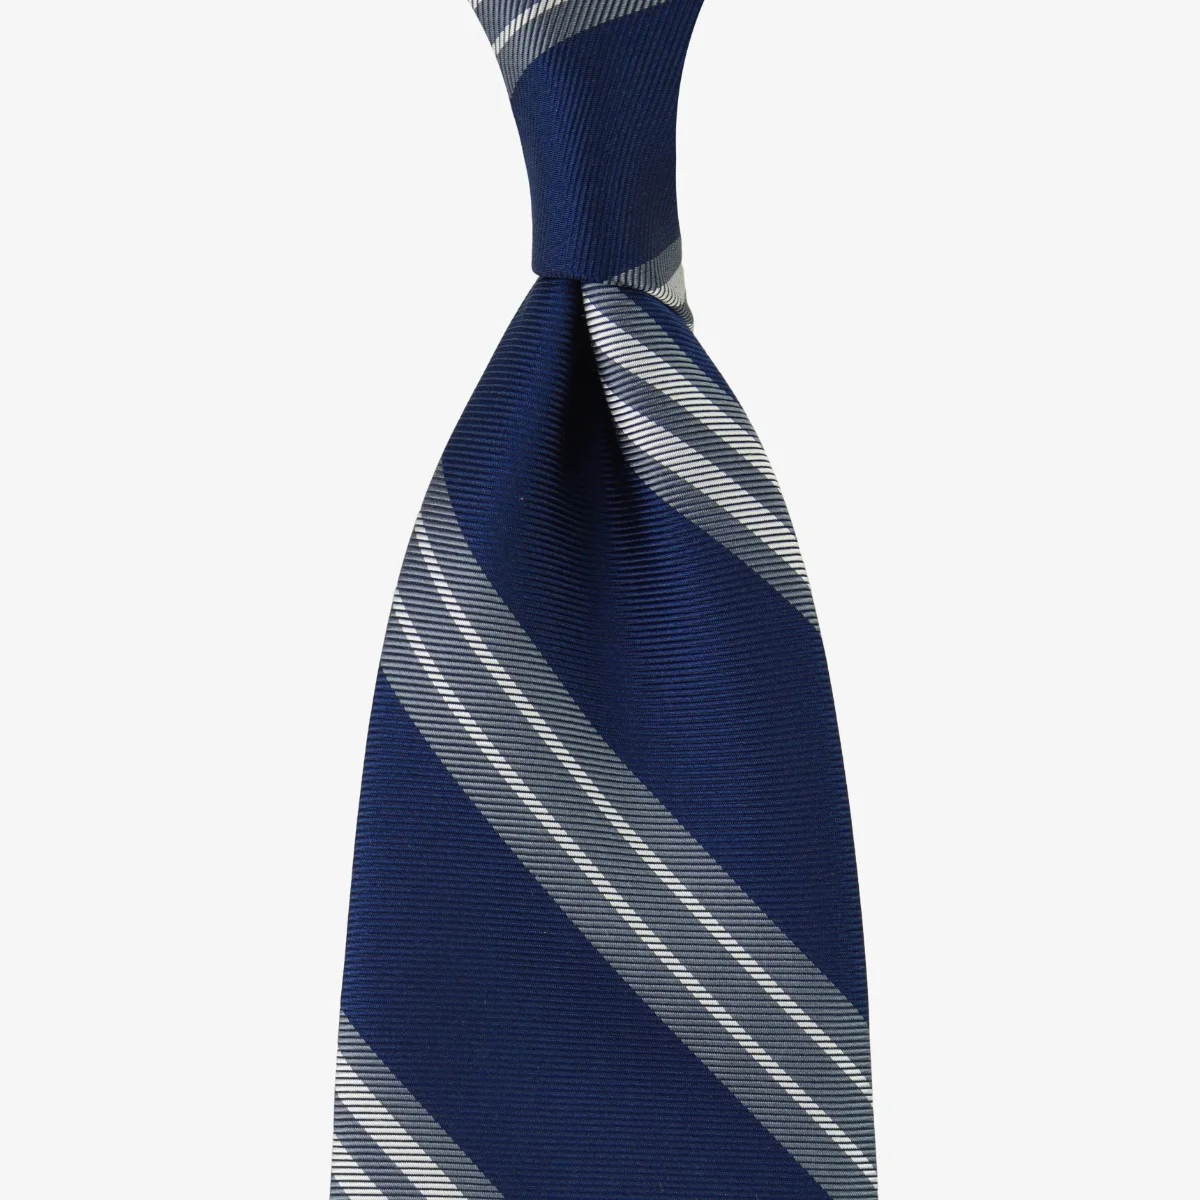 Shibumi Firenze navy and grey repp striped Japanese silk tie